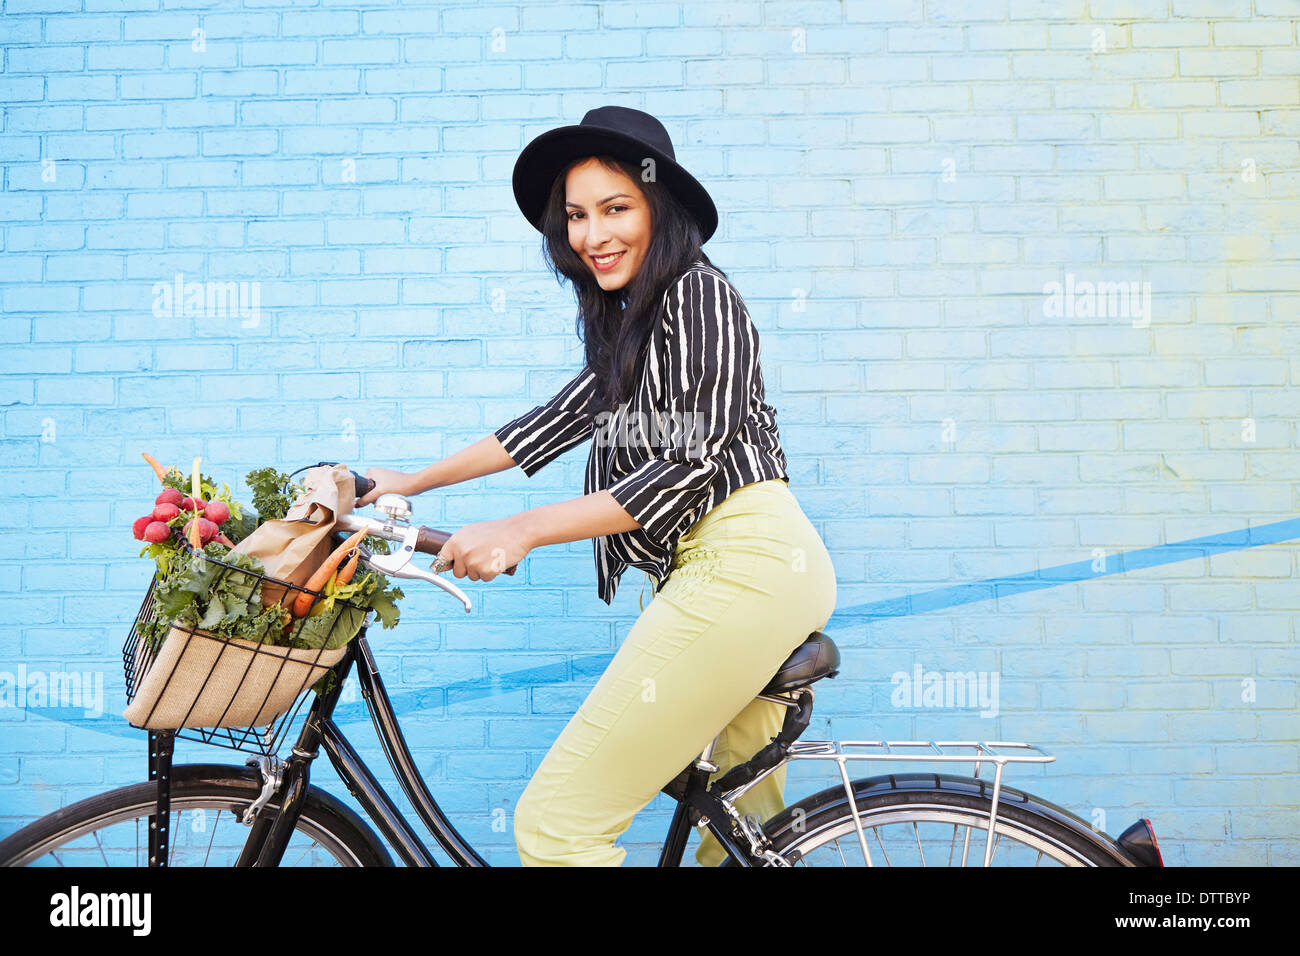 Indian woman riding bicycle along brick wall Stock Photo